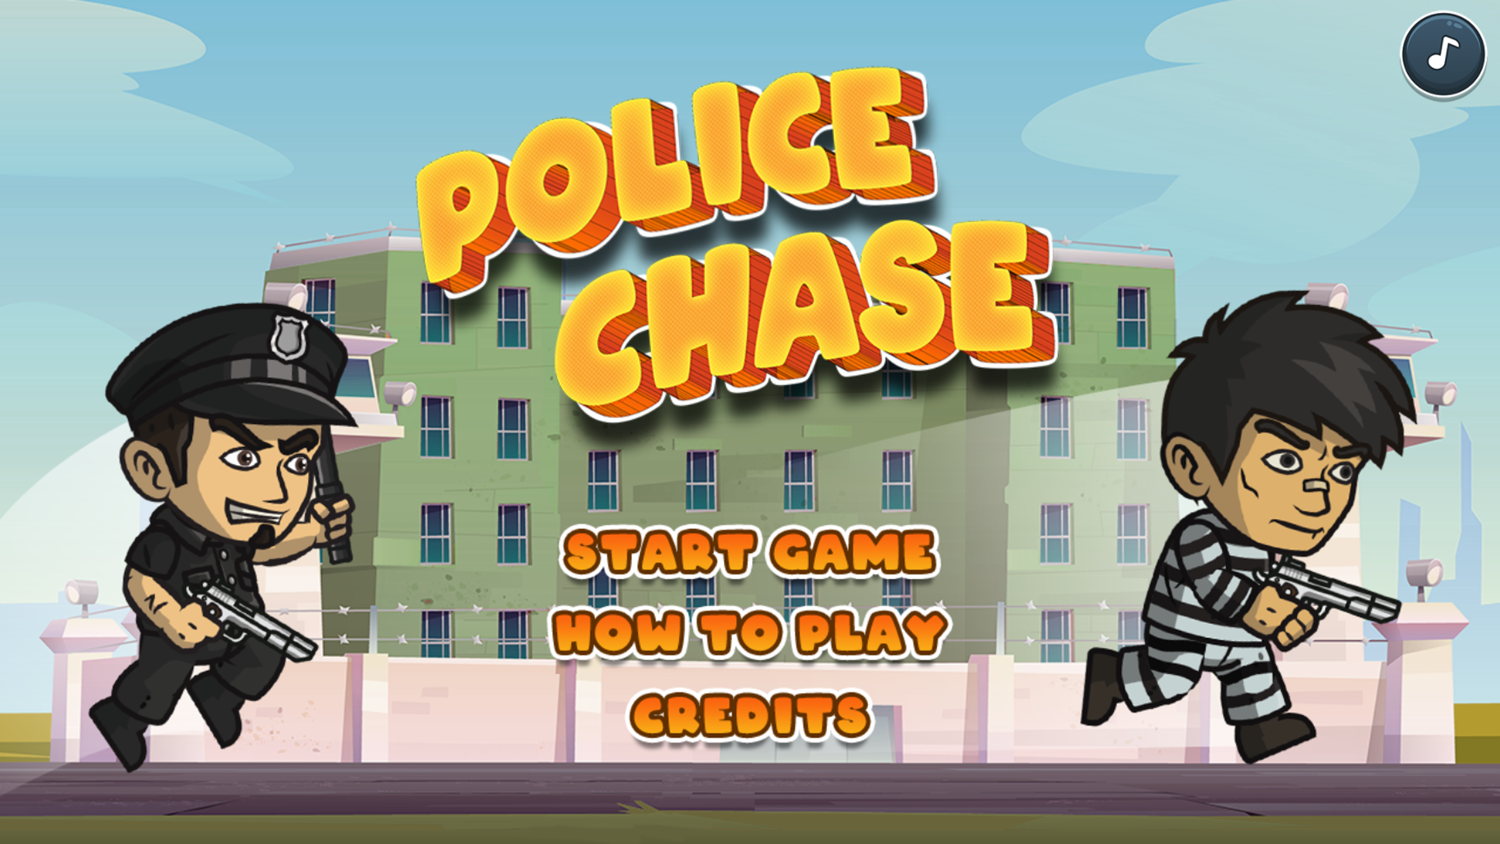 Police Chase Game Welcome Screen Screenshot.